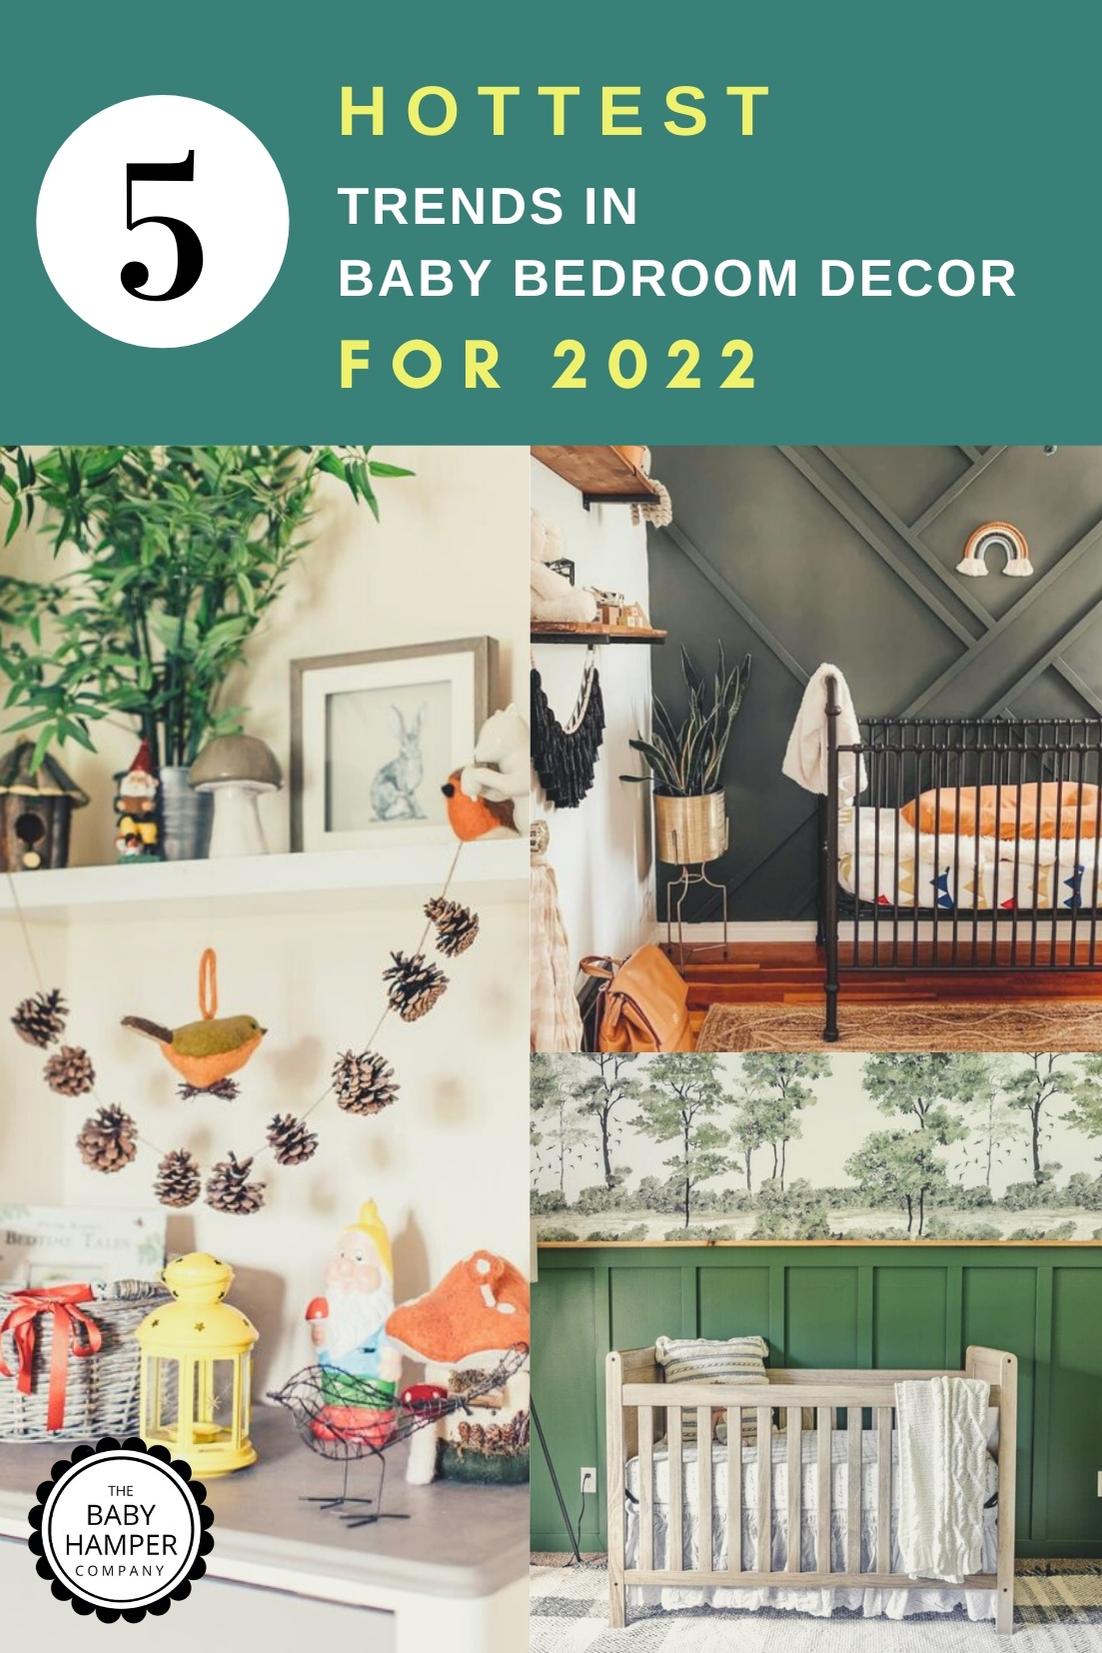 5 Hottest Trends in Baby Bedroom Decor 2022